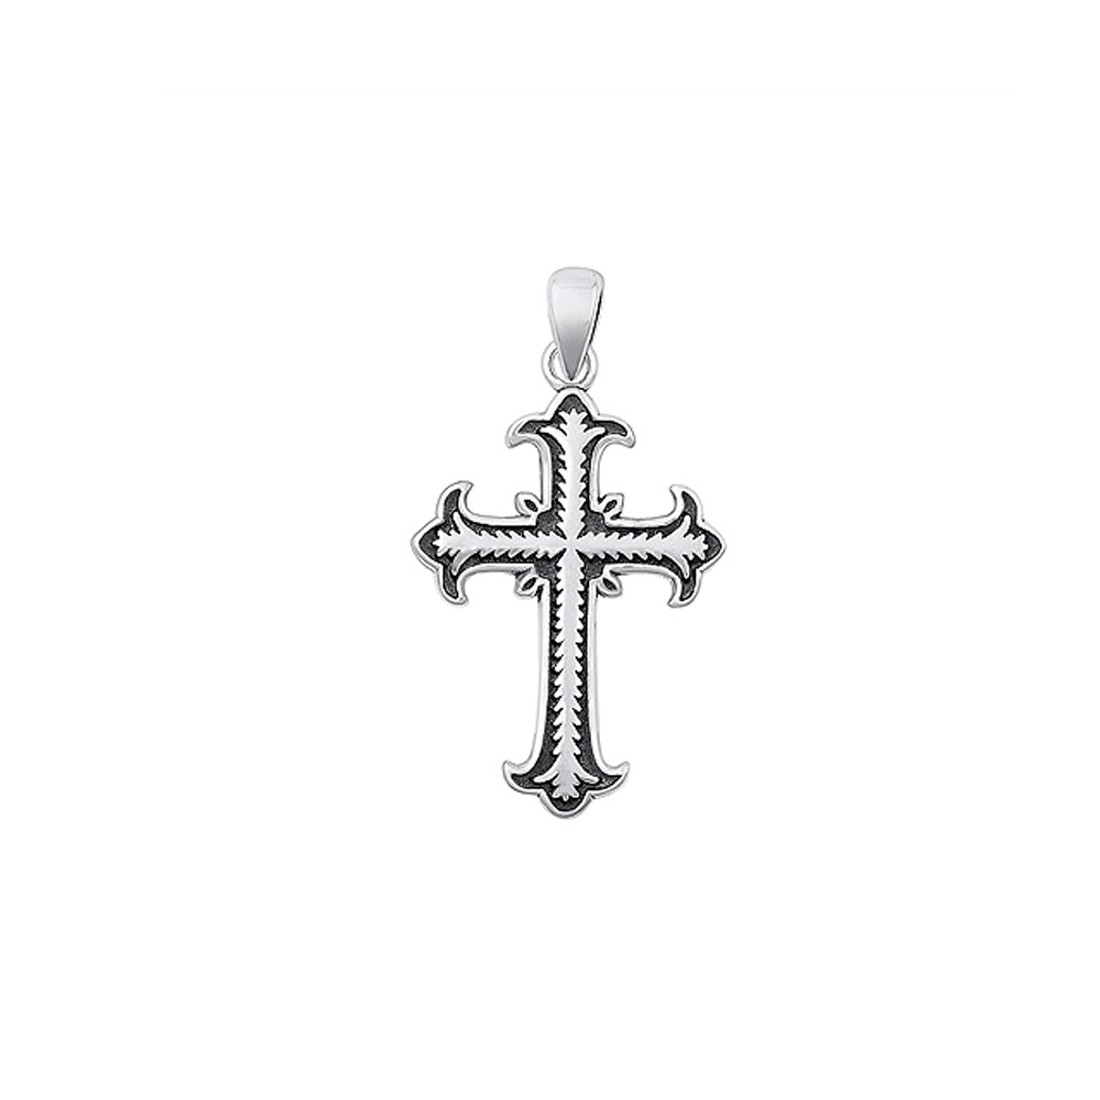 Sterling silver cross pendant. 